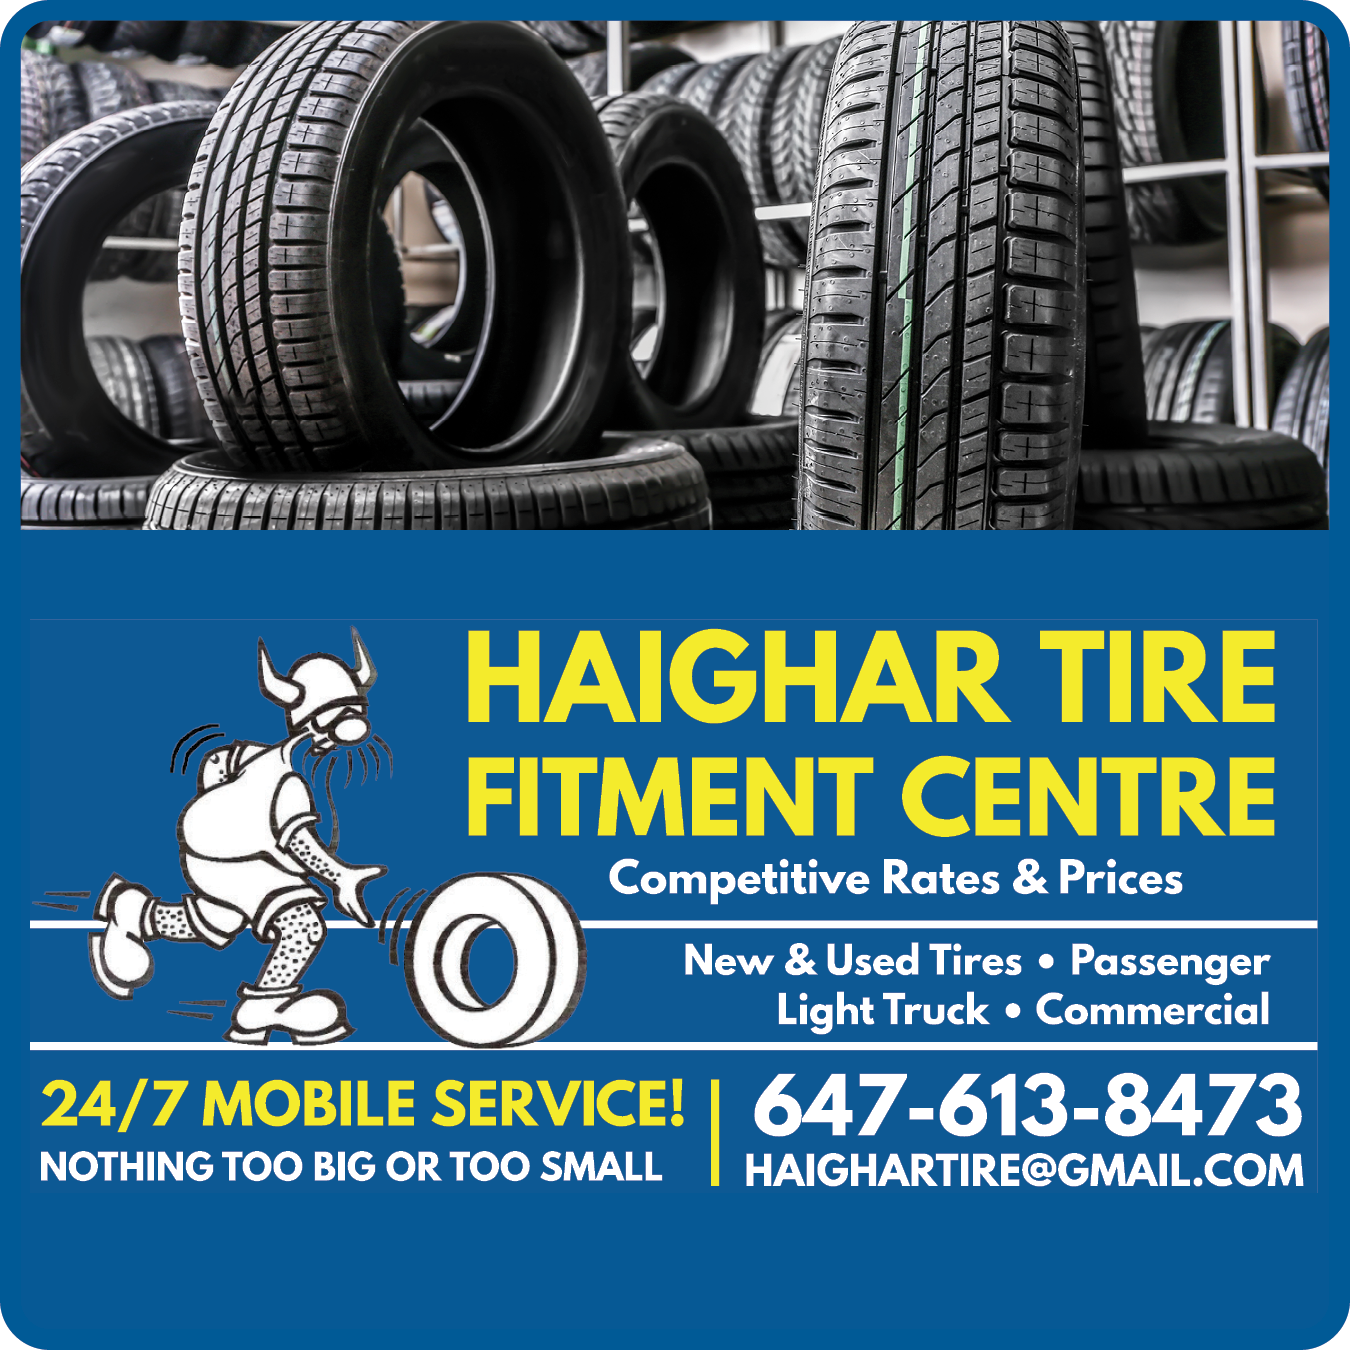 Haighar Tire Fitment Centre